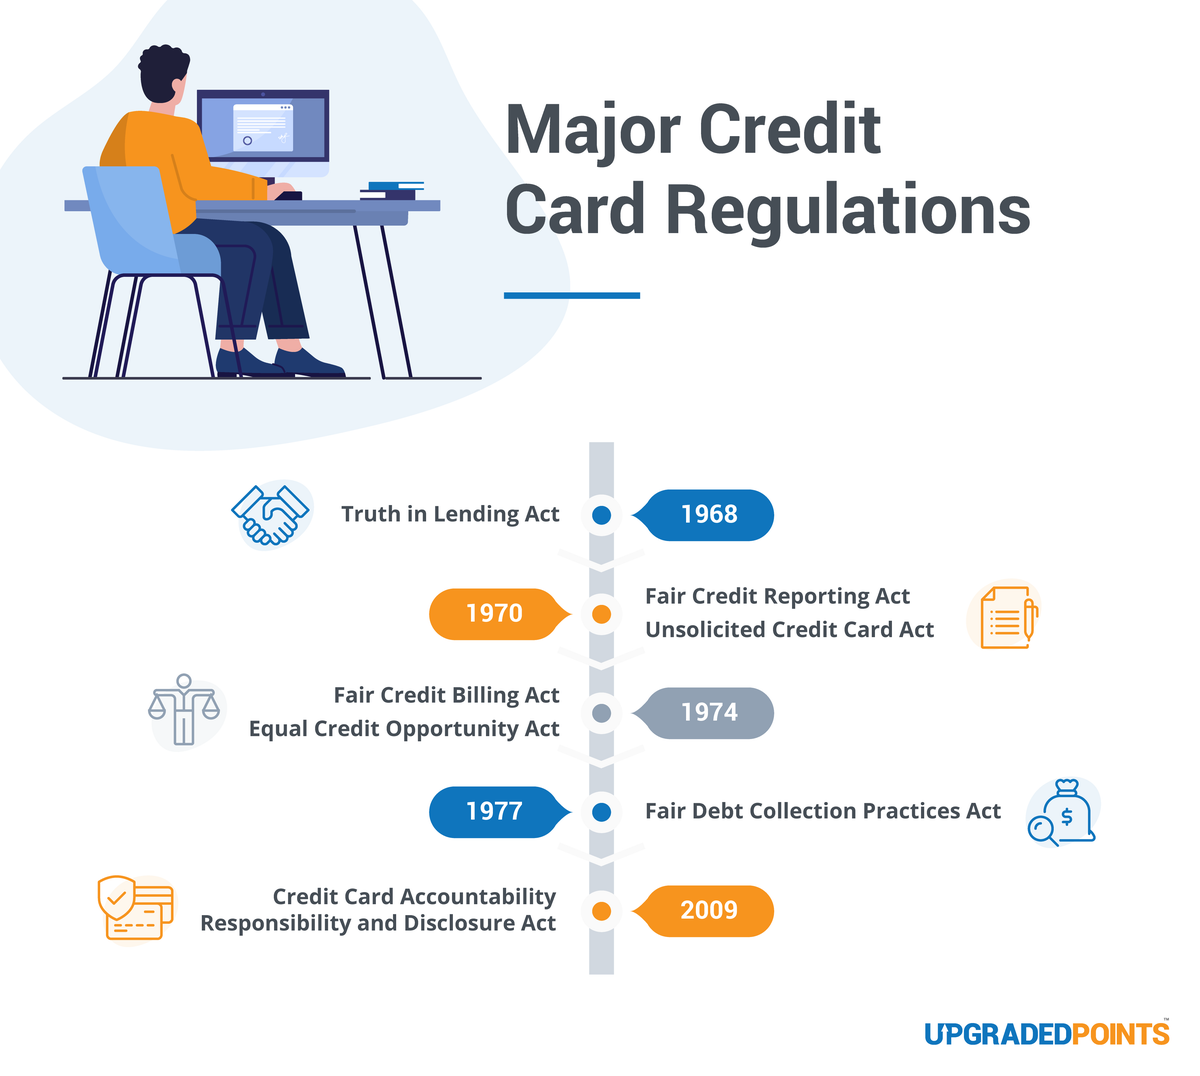 Major Credit Card Regulations